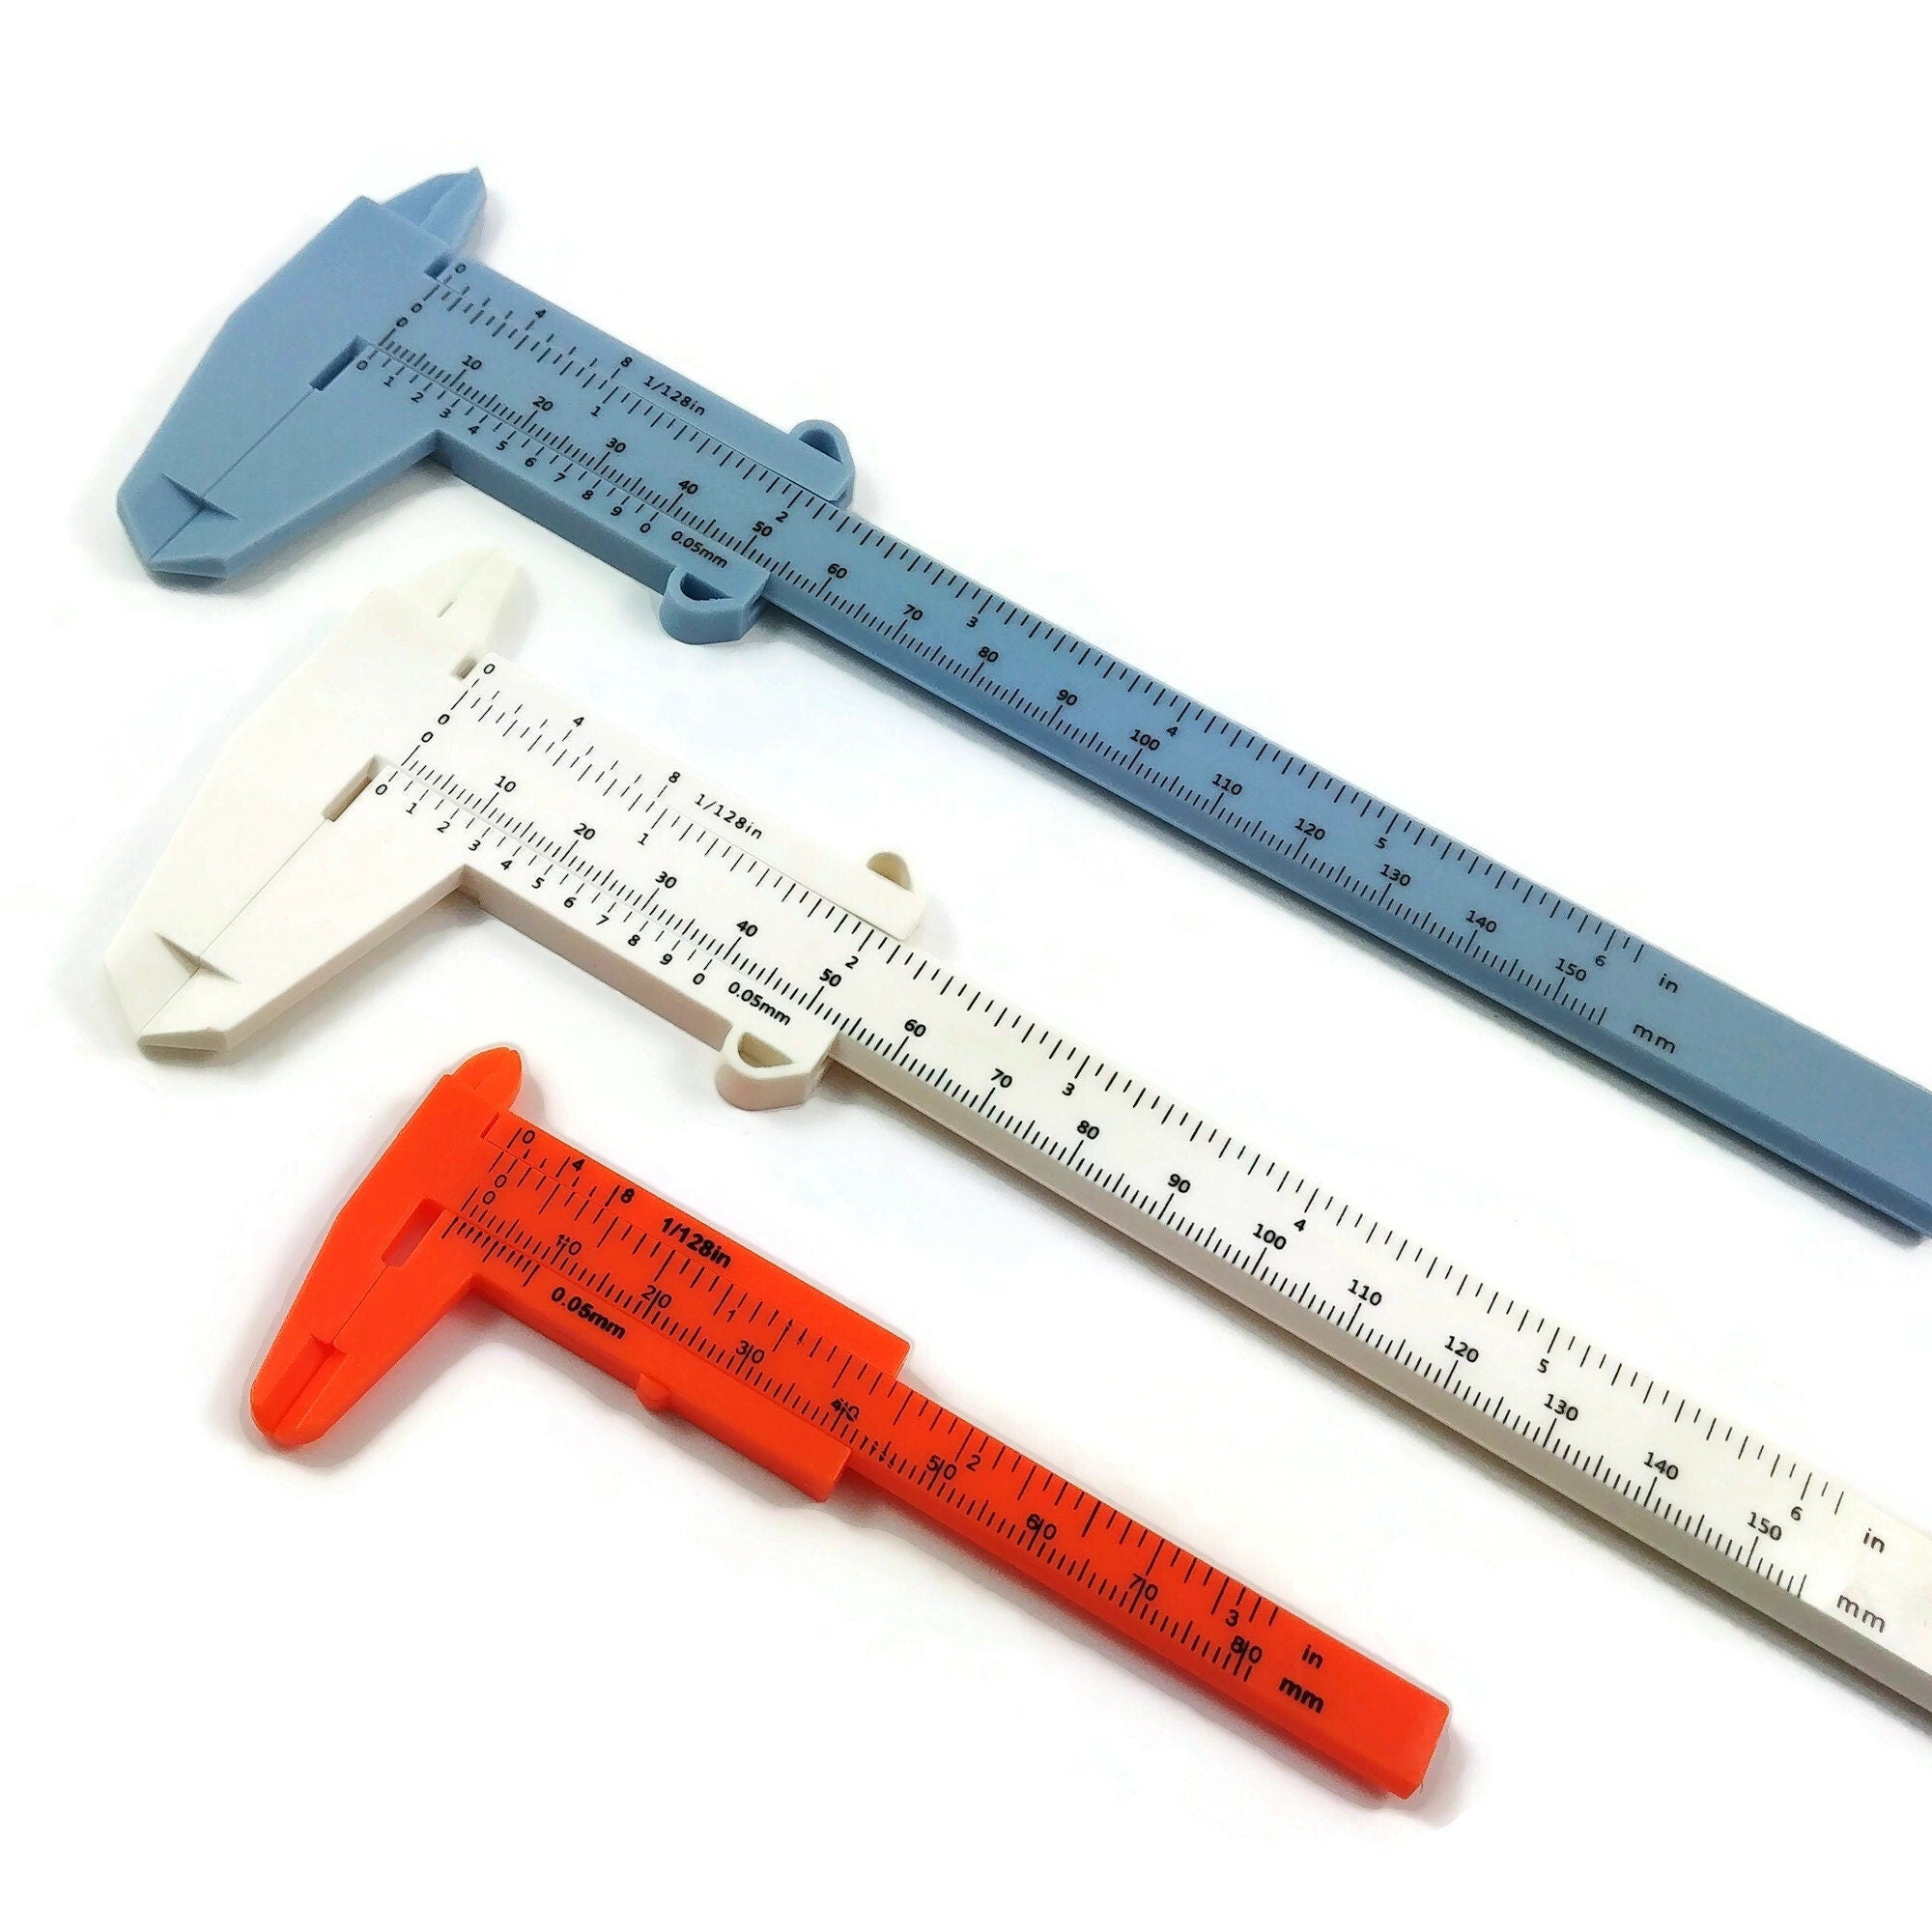 Plastic Vernier Caliper, Jewelry beads gauge measuring tool, Metric imperial scale ruler